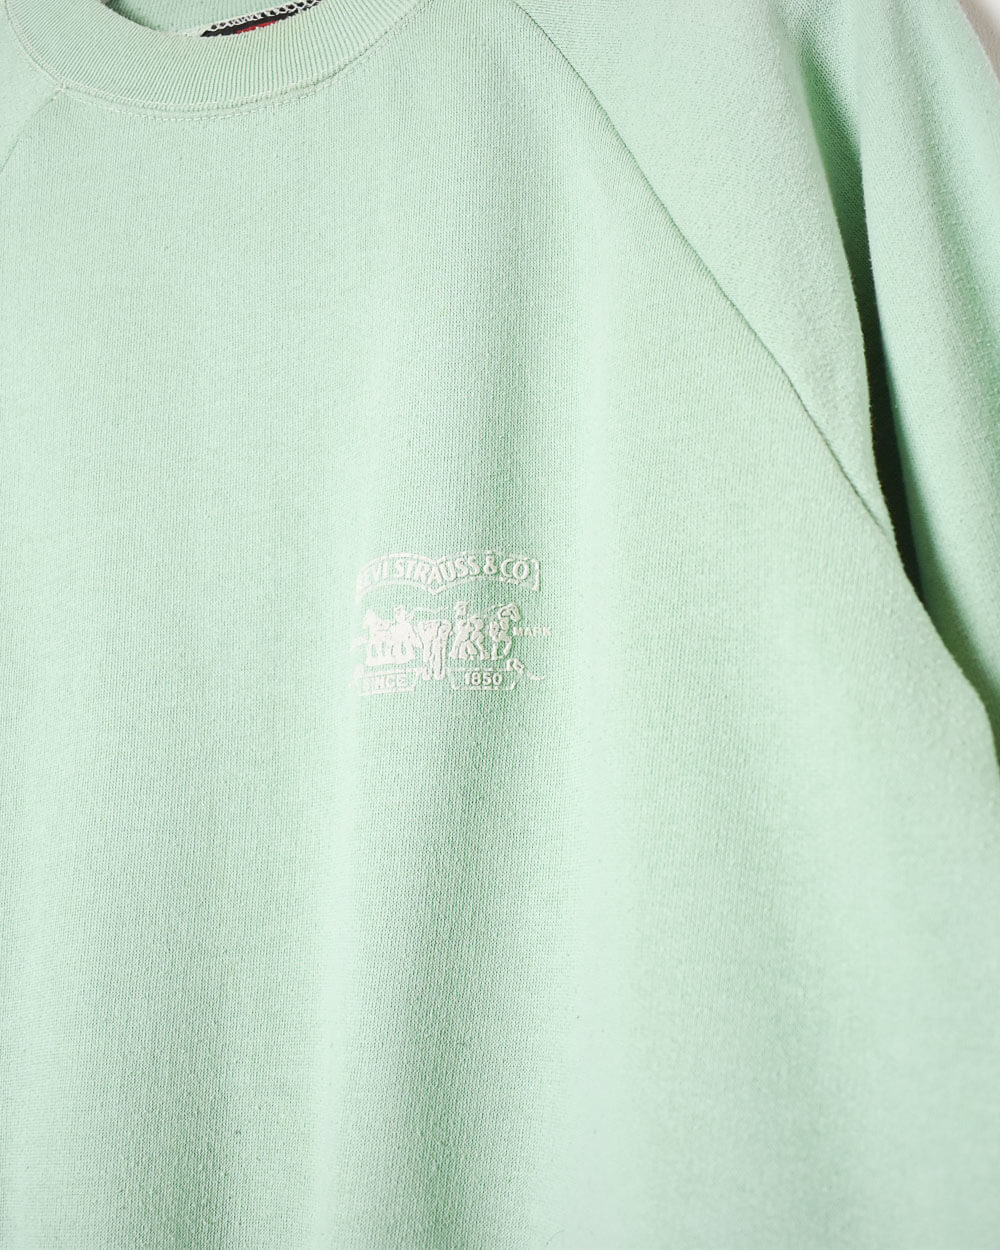 Green Levi's Sweatshirt - Medium